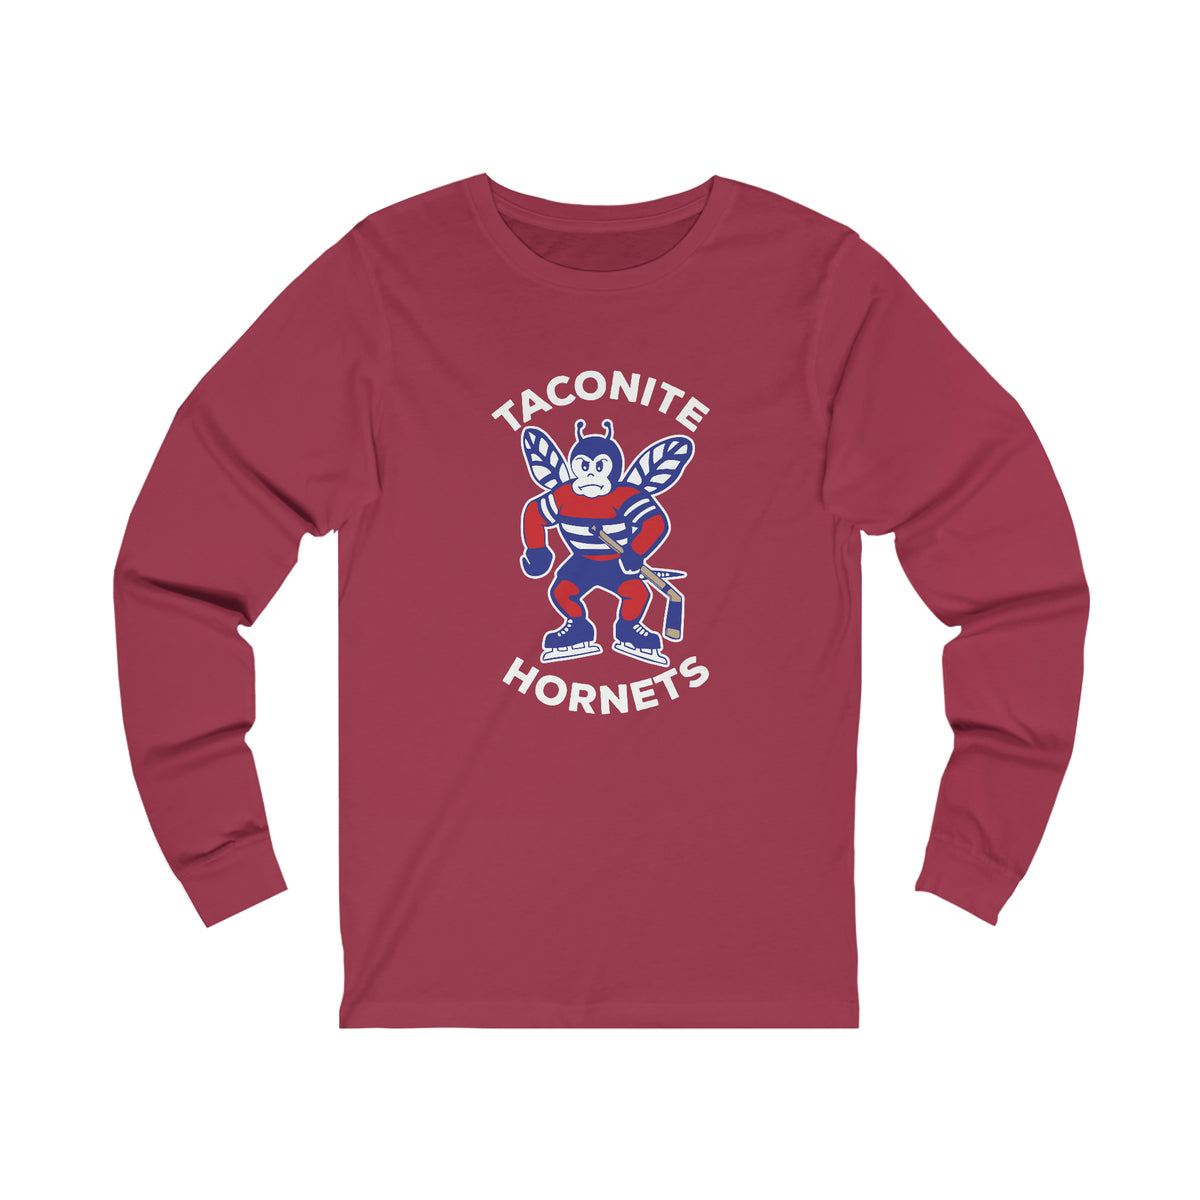 Taconite Hornets Long Sleeve Shirt – Vintage Ice Hockey